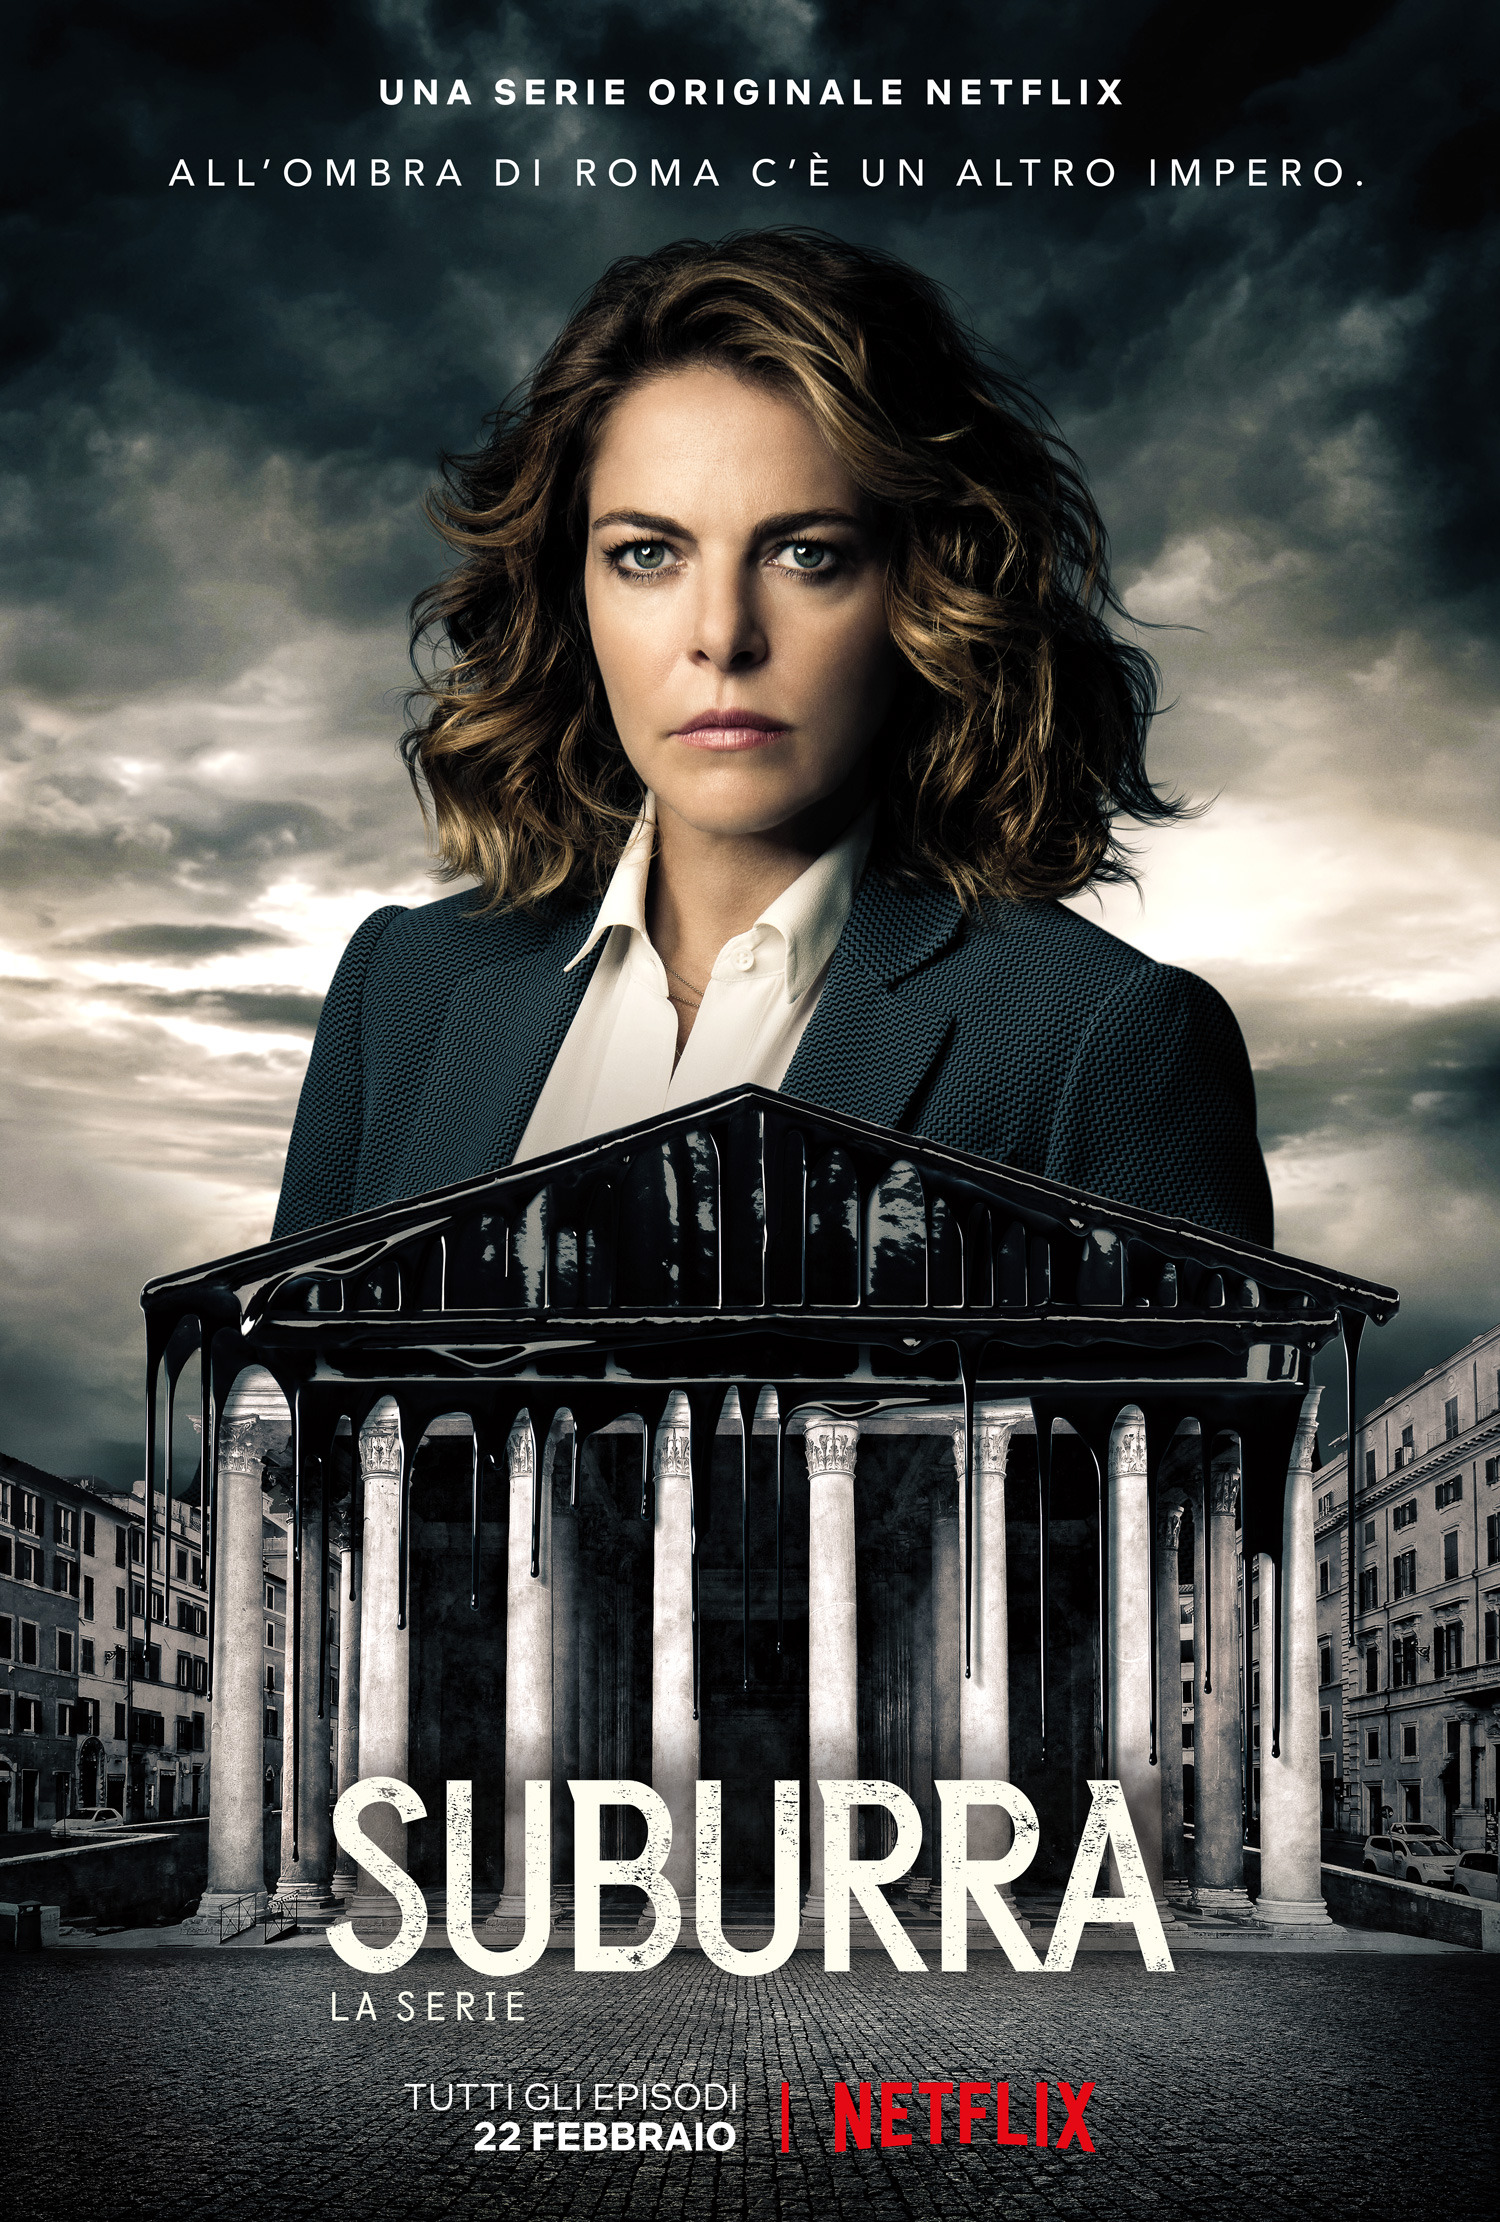 Mega Sized TV Poster Image for Suburra: la serie (#9 of 12)